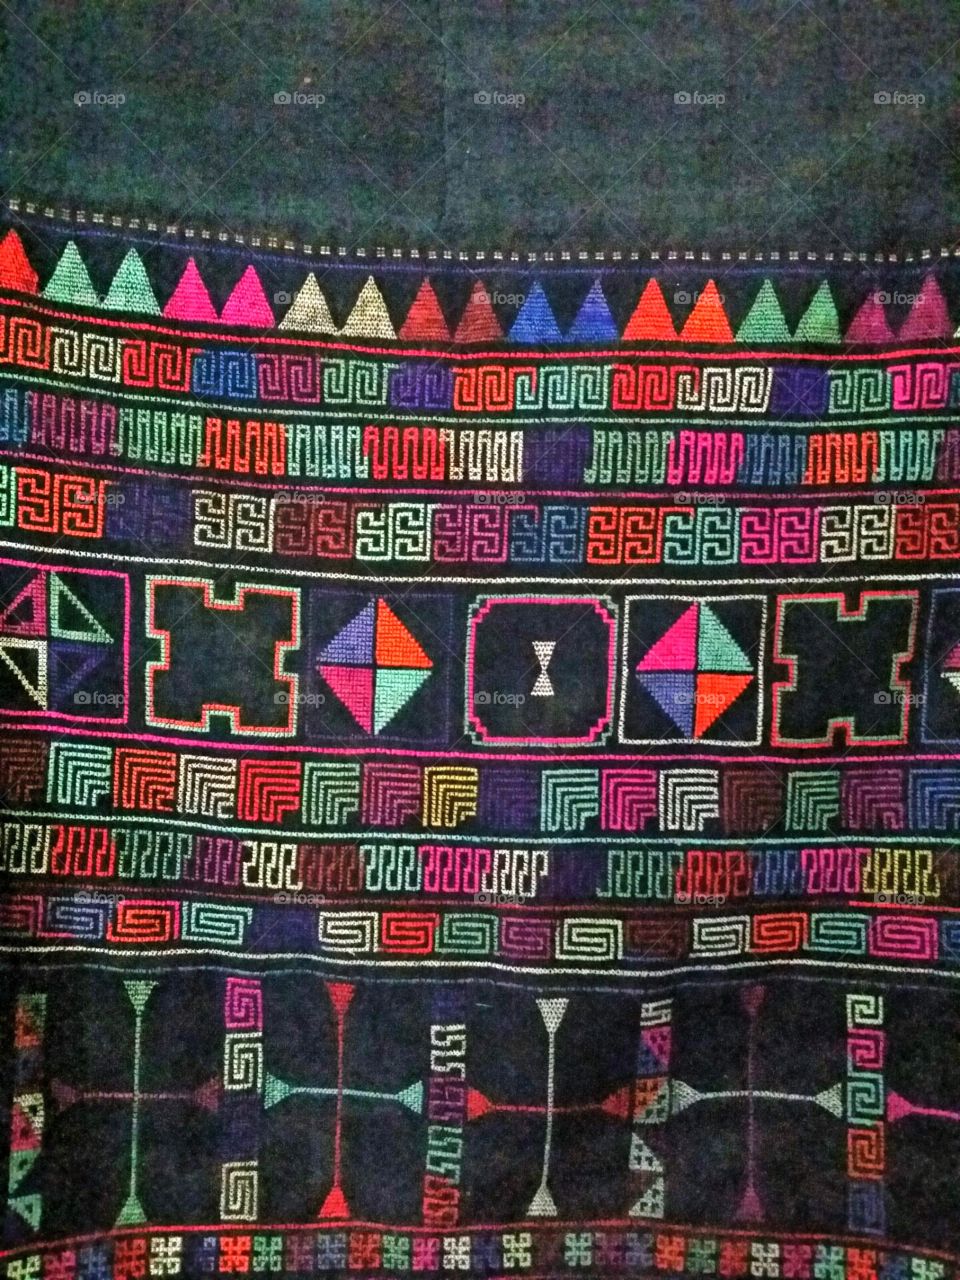 Aini Ethnic Minority clothing stitching handiwork embroidery cross stitch